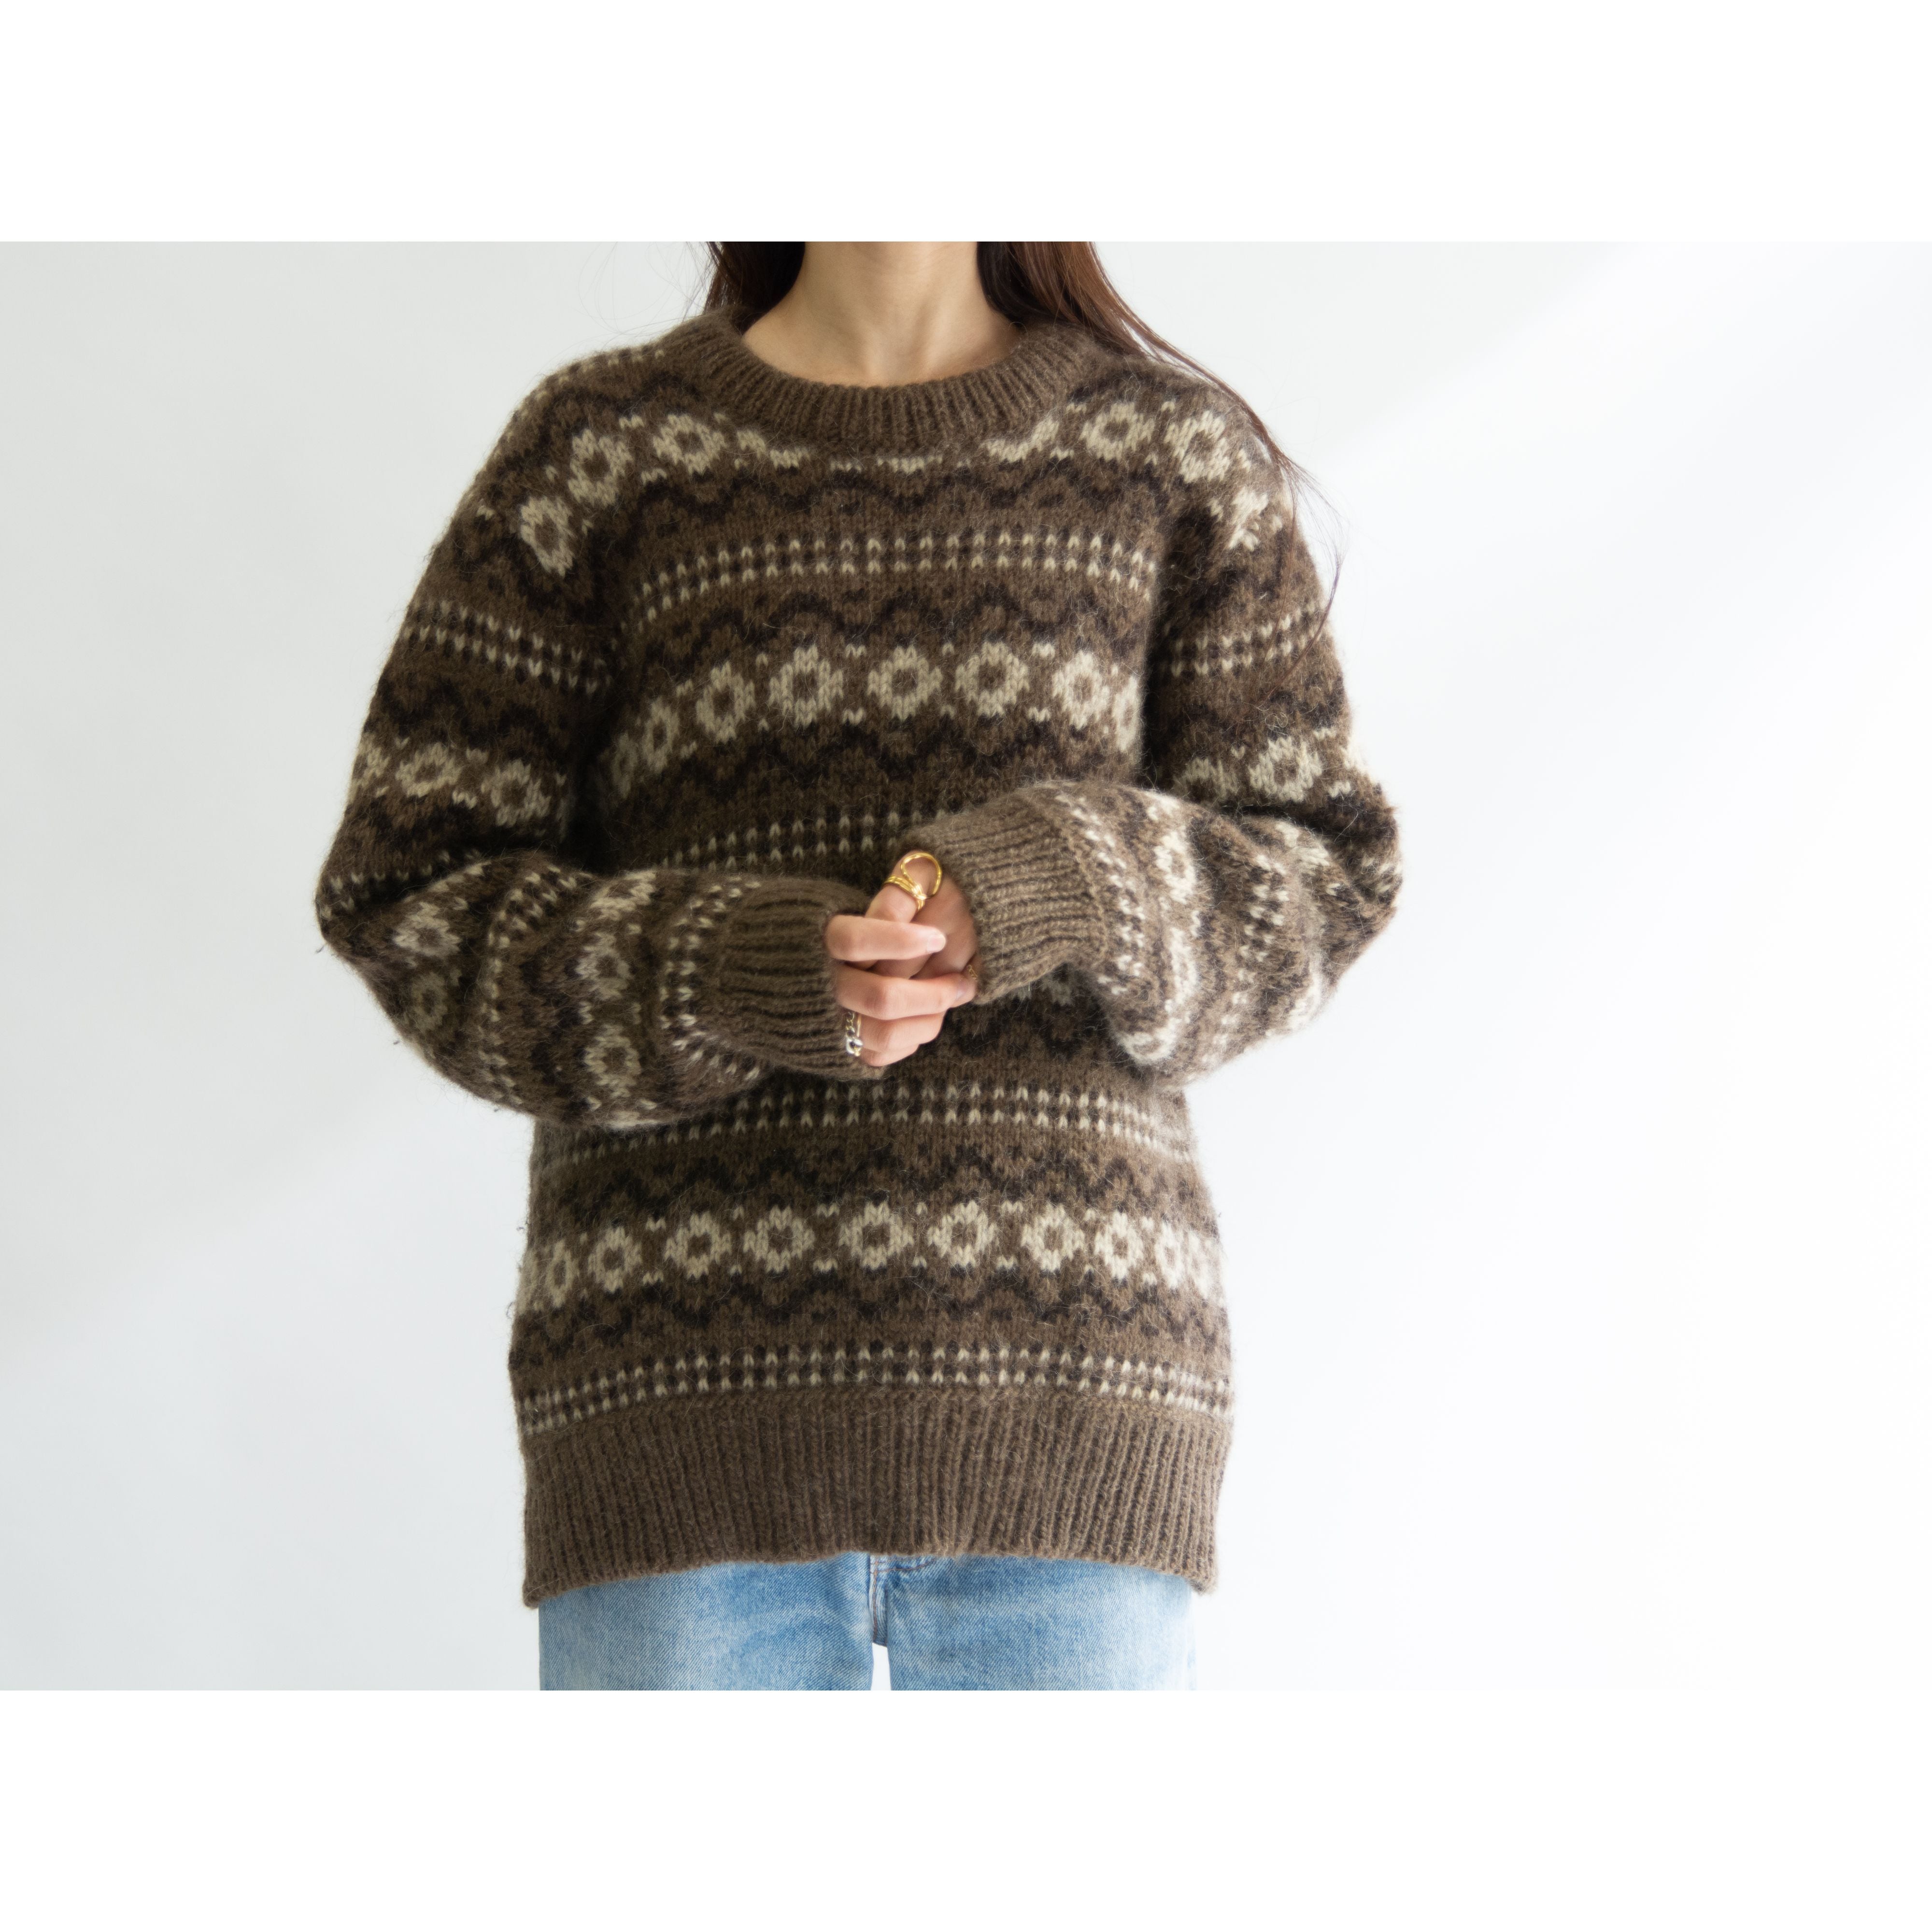 Gaeltarra】Made in Ireland 100% wool Nordic sweater（ゲイルターラ